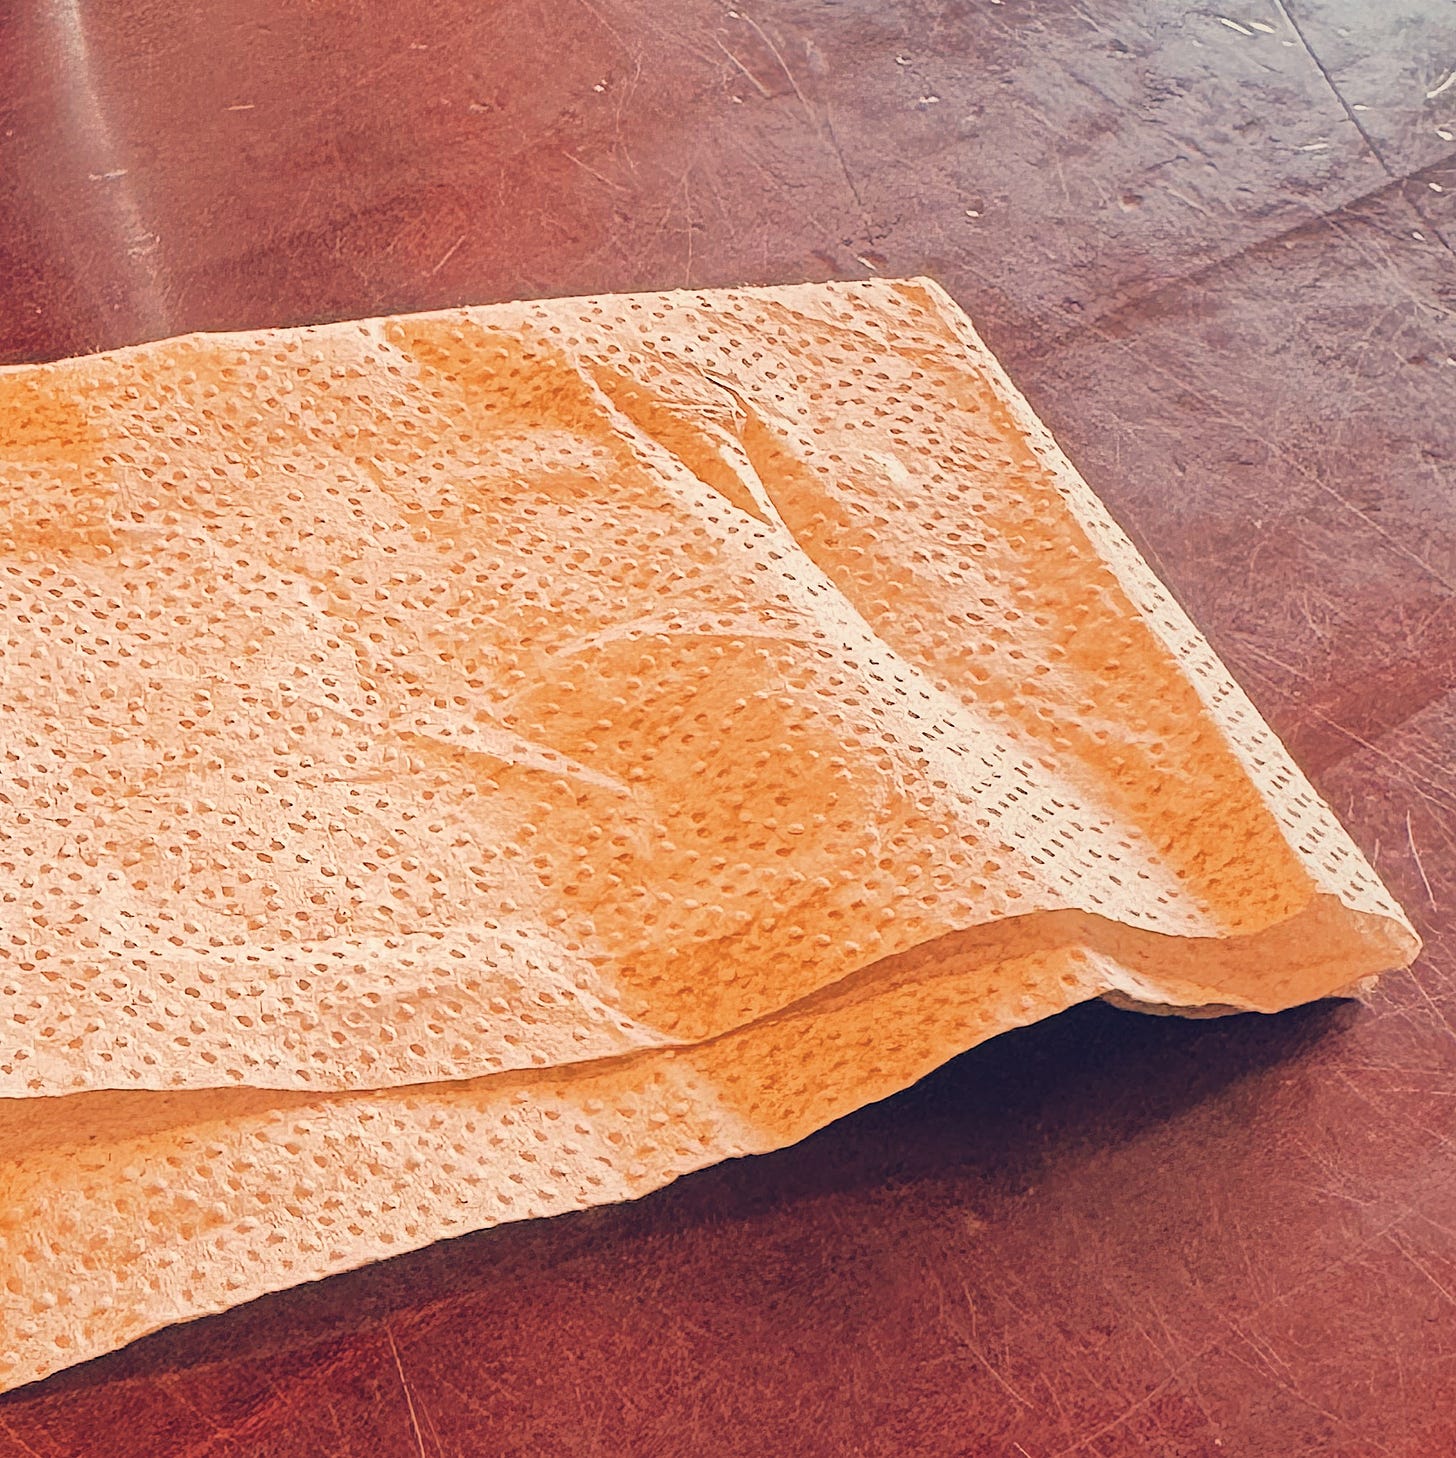 Photo of a napkin